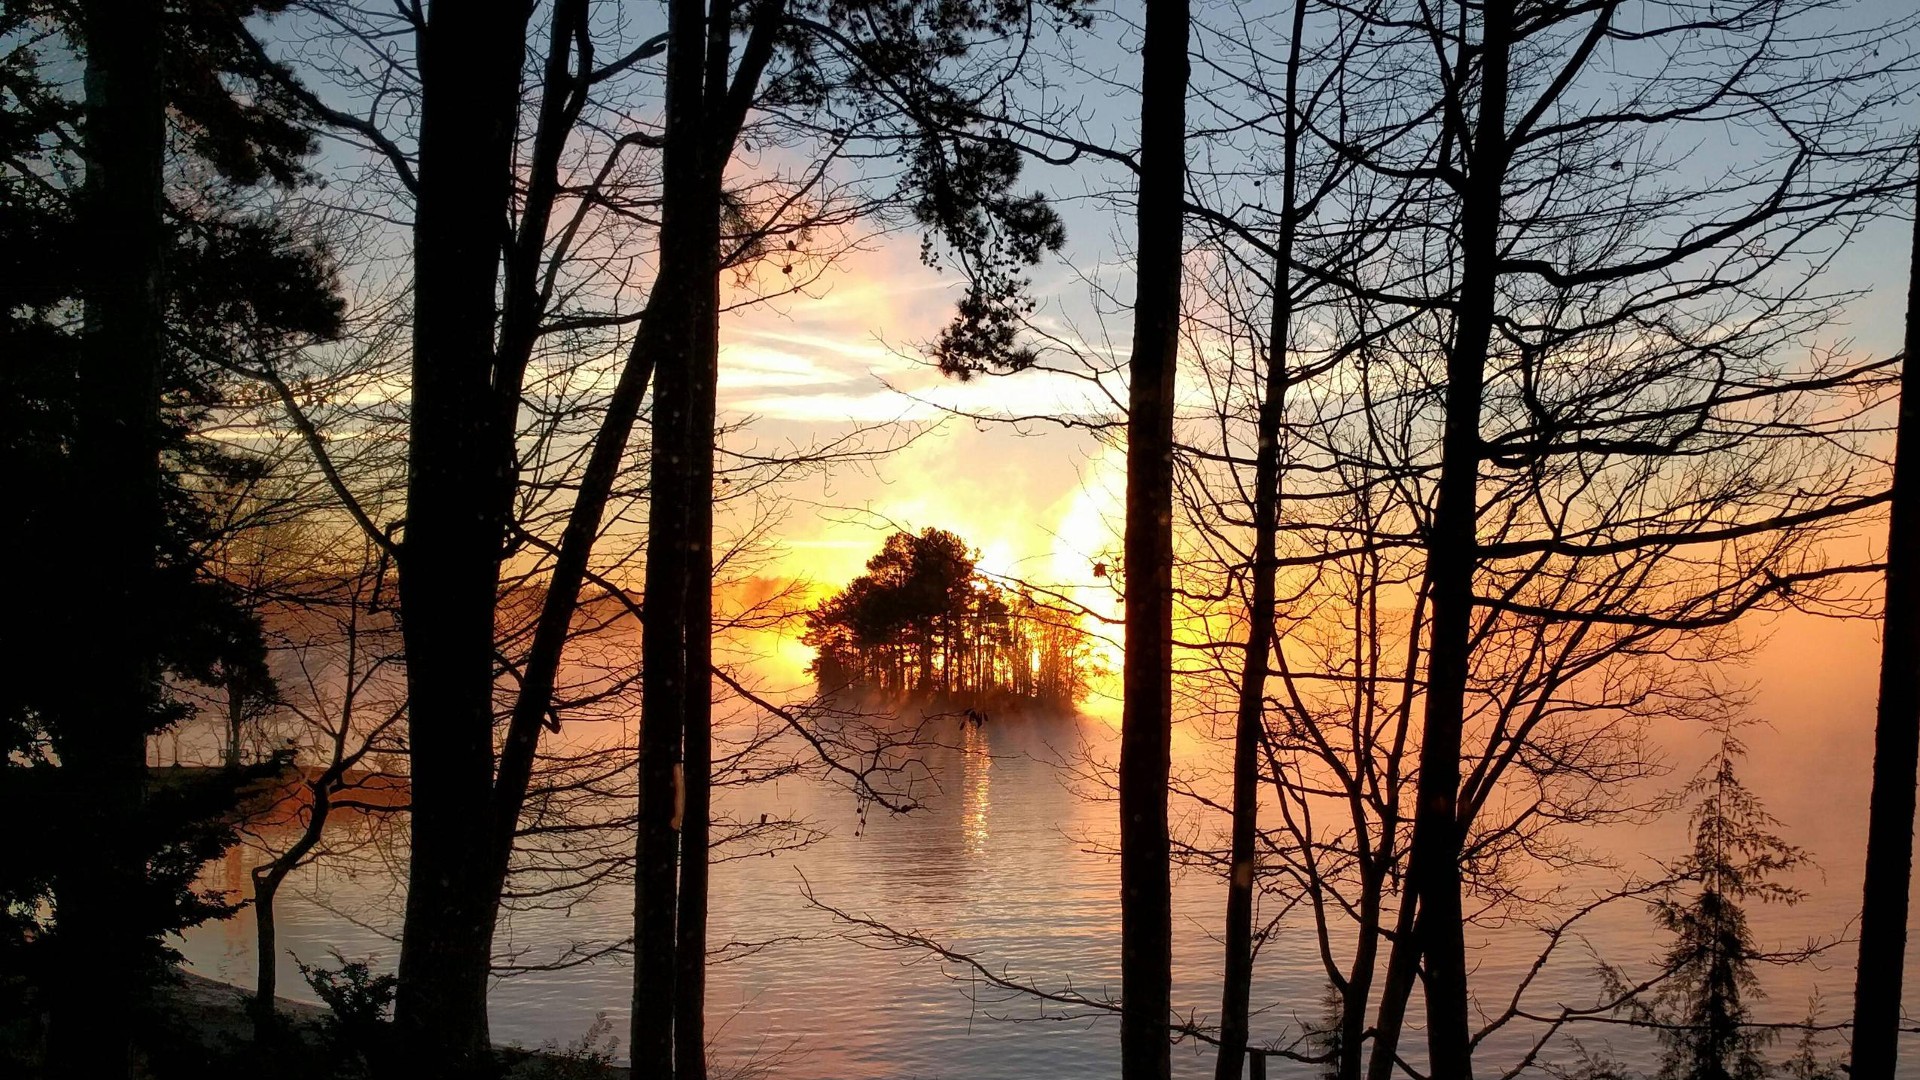 General 1920x1080 South Carolina trees island sunset mist sunrise lake USA nature sunlight